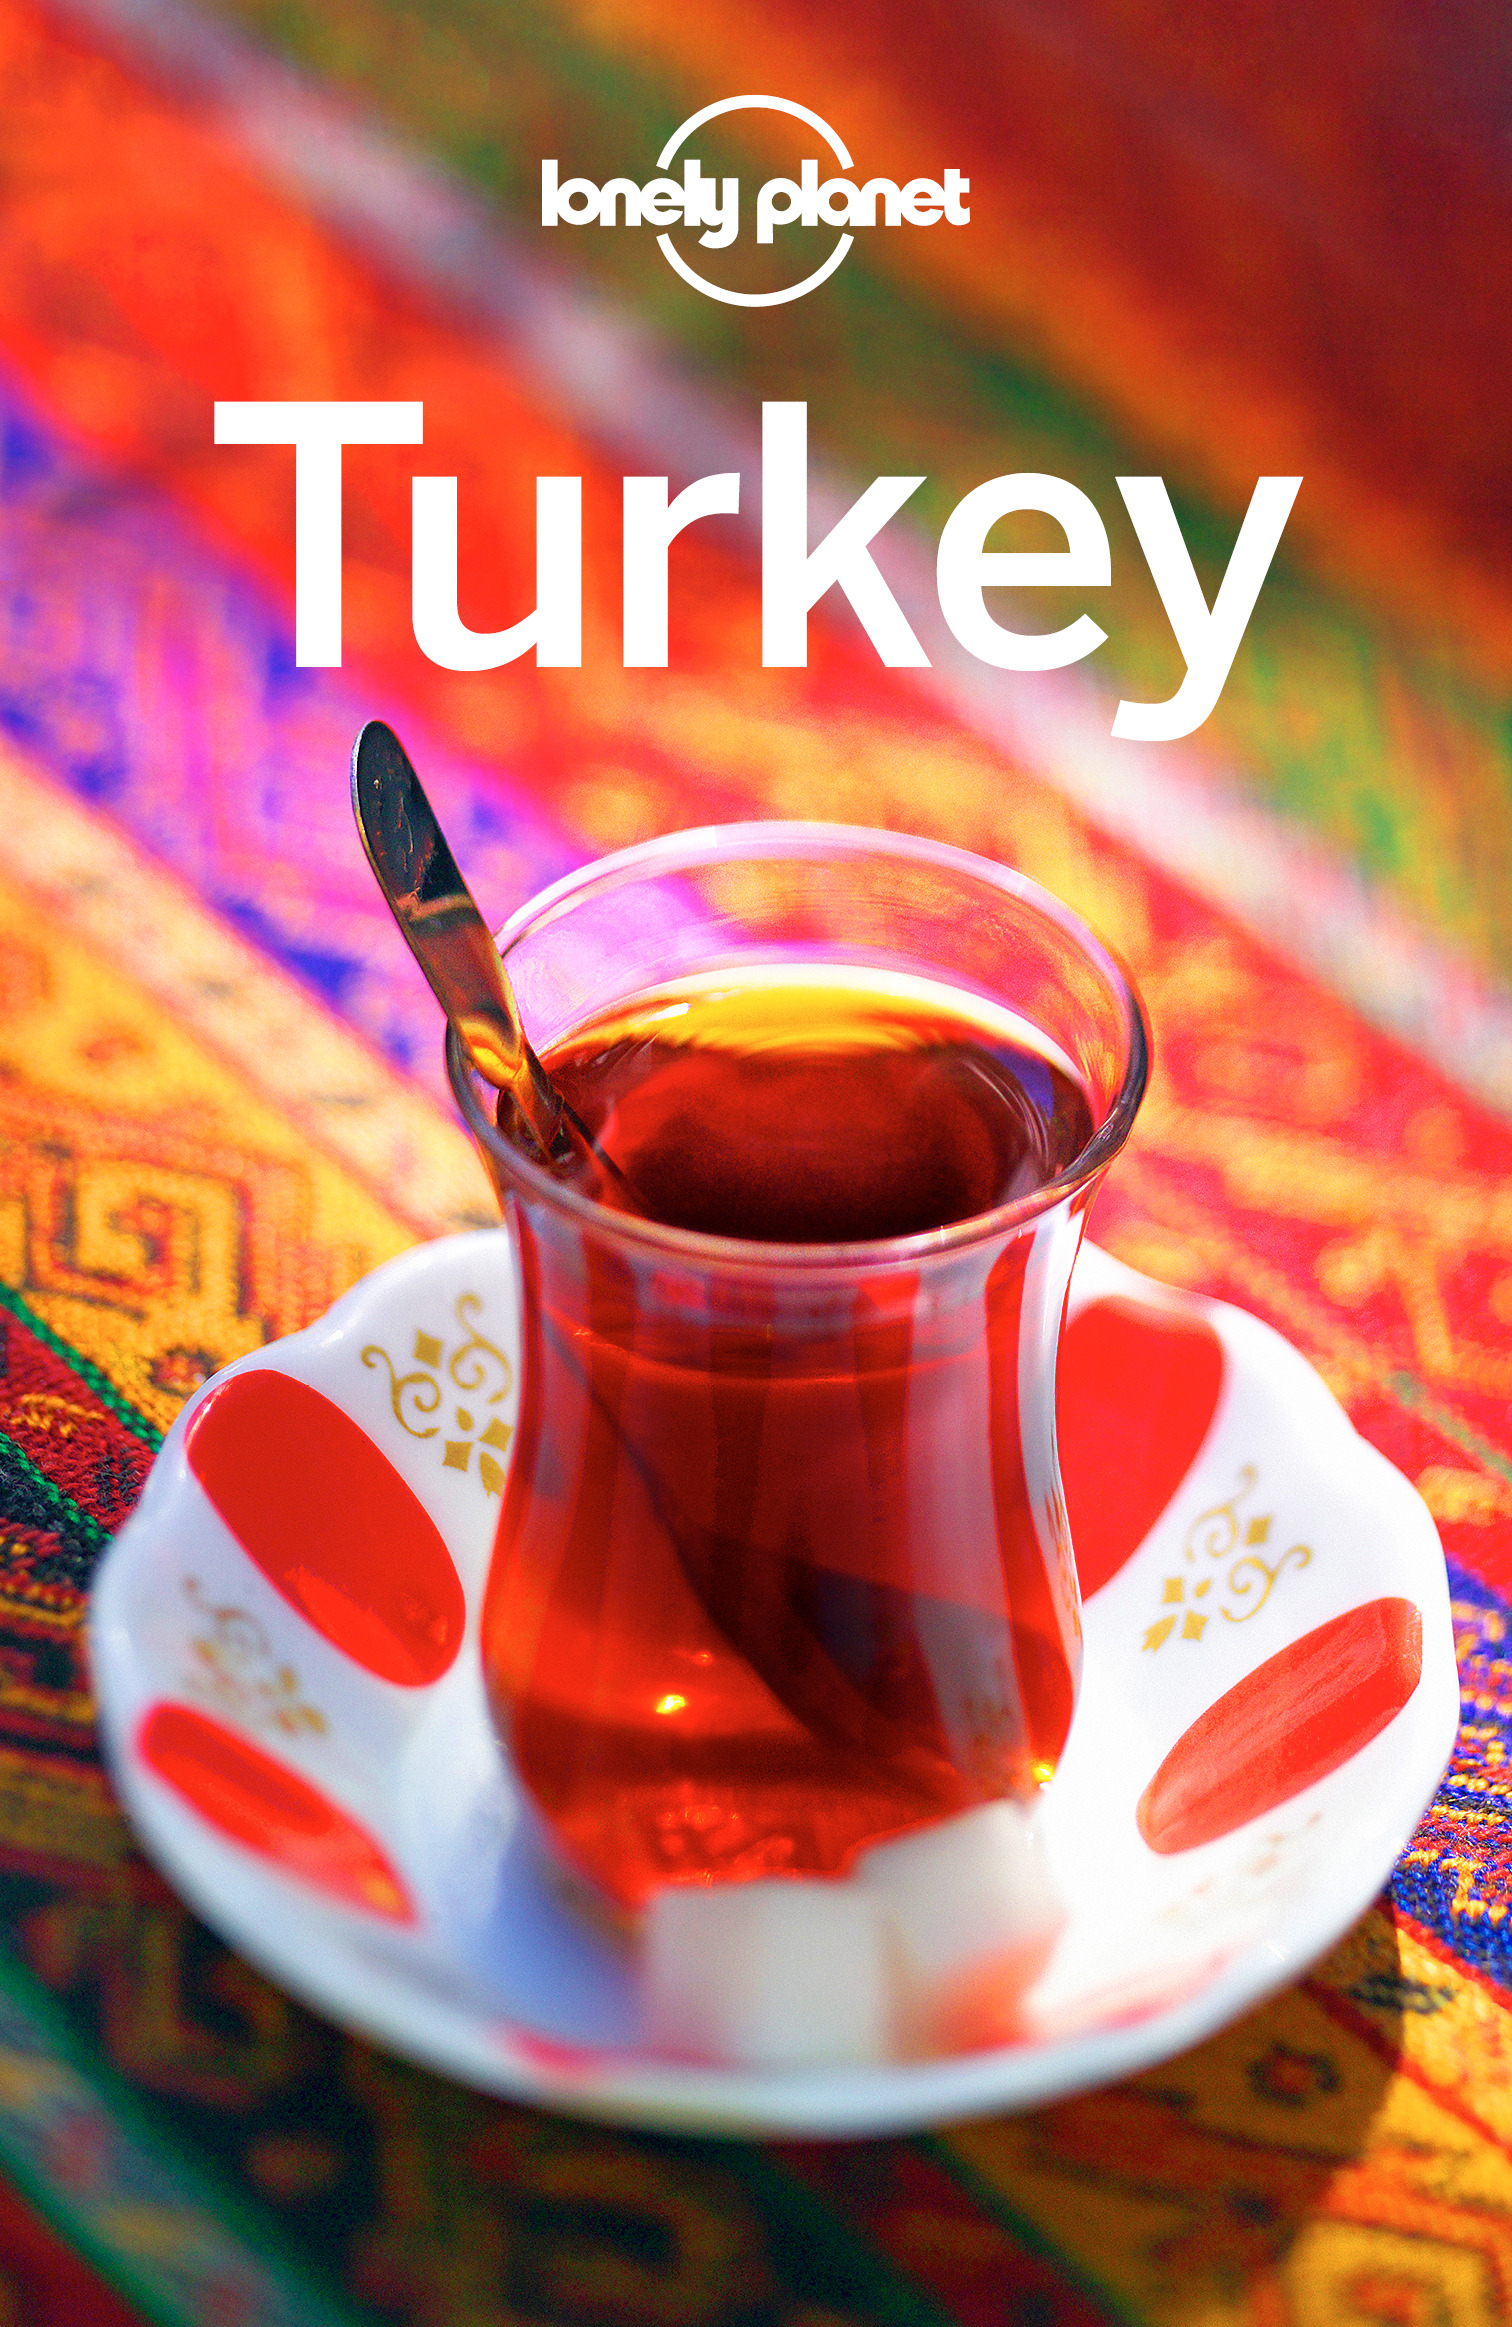 Atkinson, Brett - Lonely Planet Turkey, e-kirja